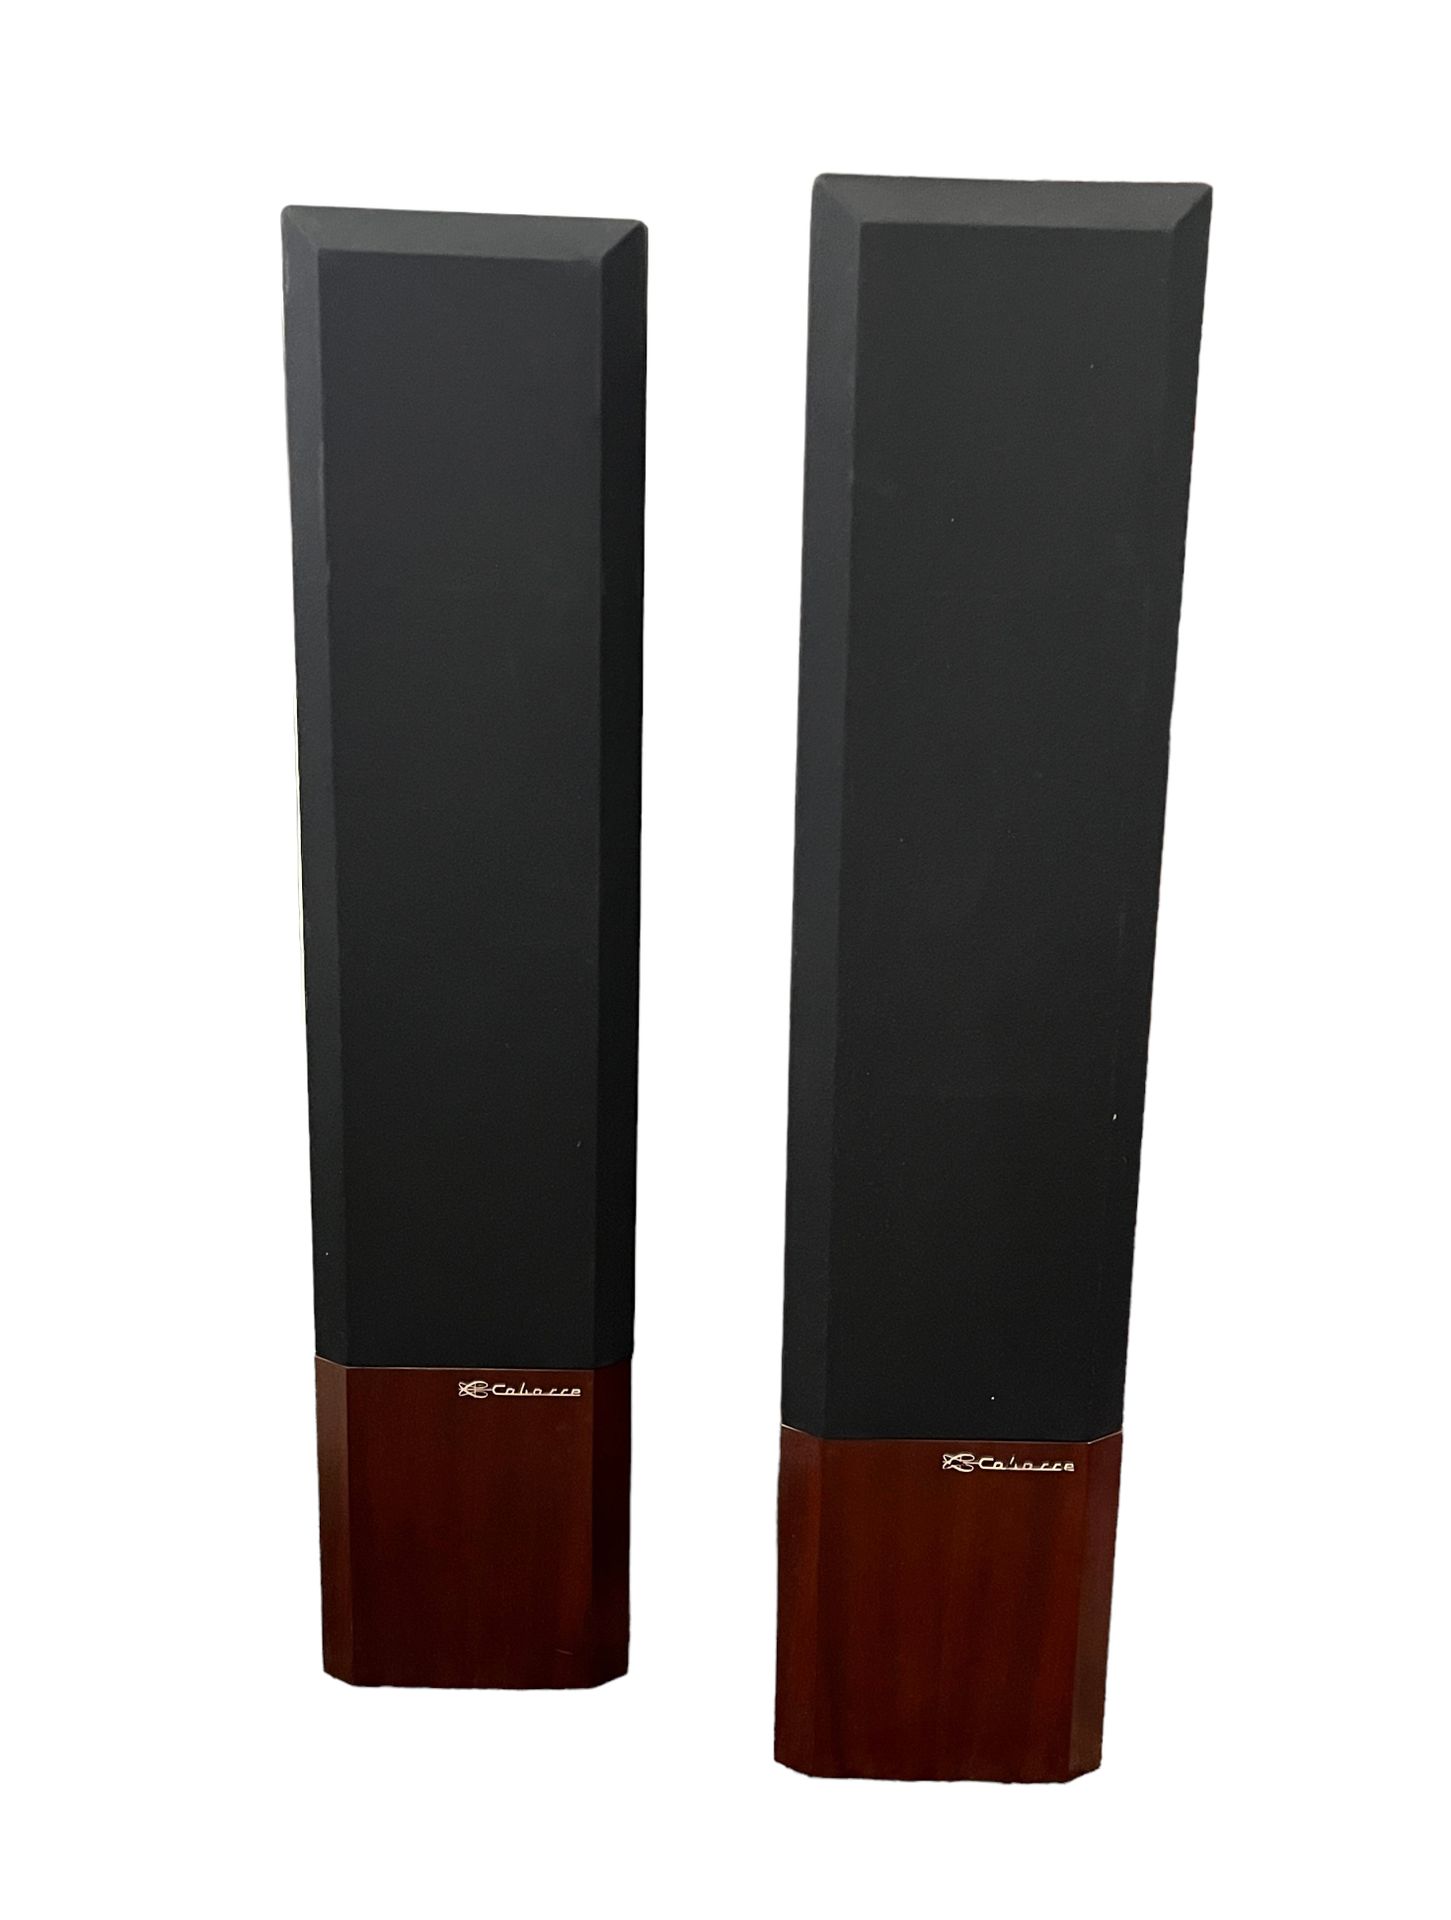 Null CABASSE.

Model Column 135. Pair of speakers, 1990's.

Two amplifiers model&hellip;